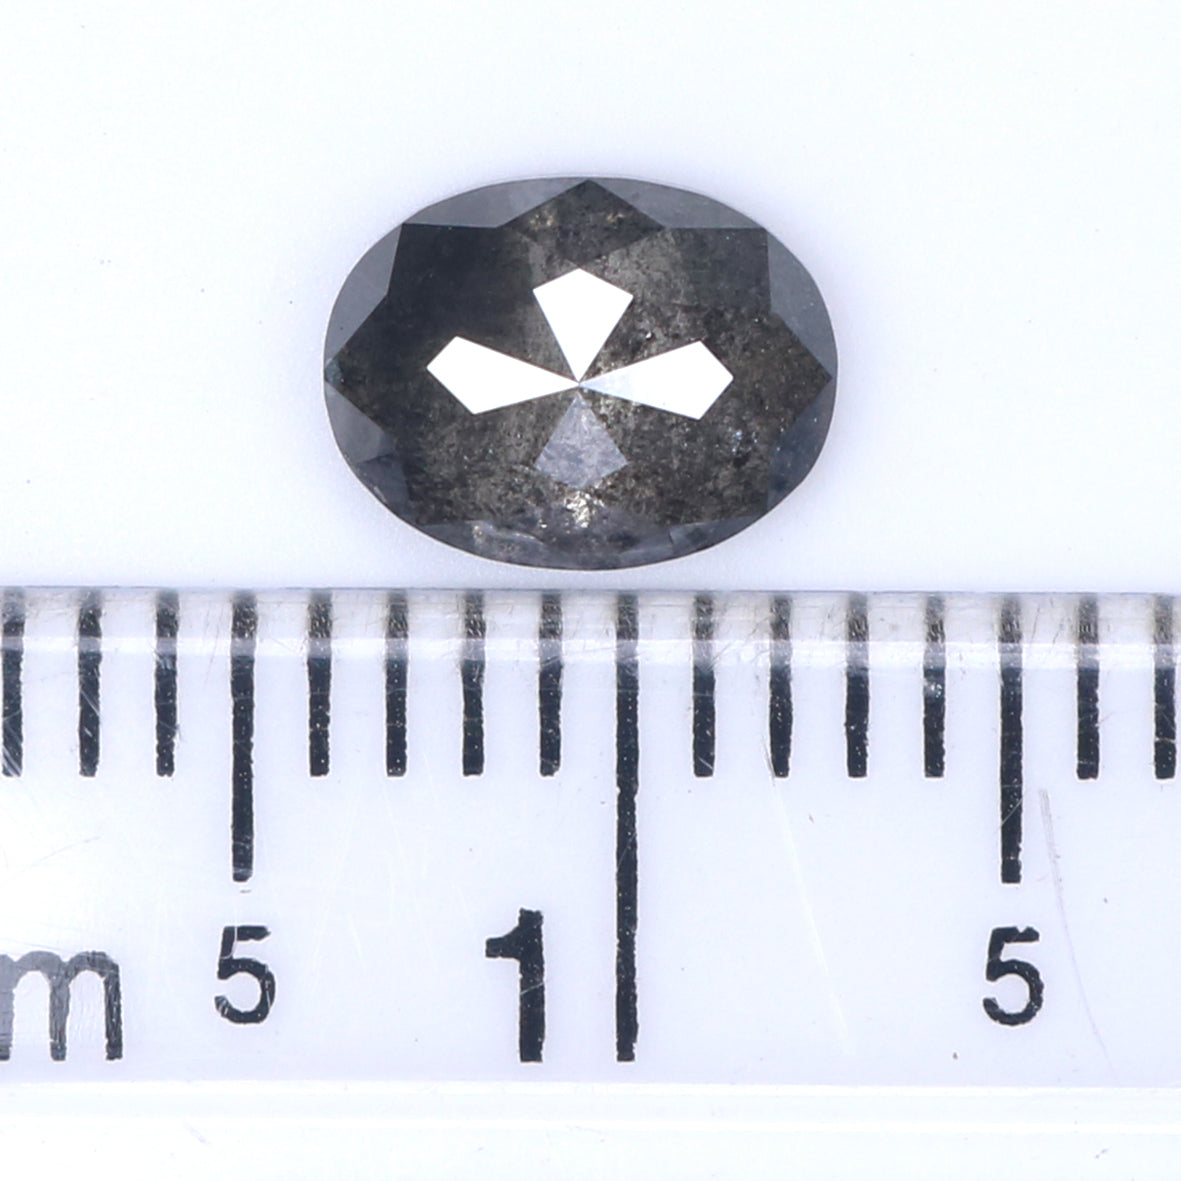 Natural Loose Oval Salt And Pepper Diamond Black Grey Color 0.87 CT 6.69 MM Oval Shape Rose Cut Diamond L2059